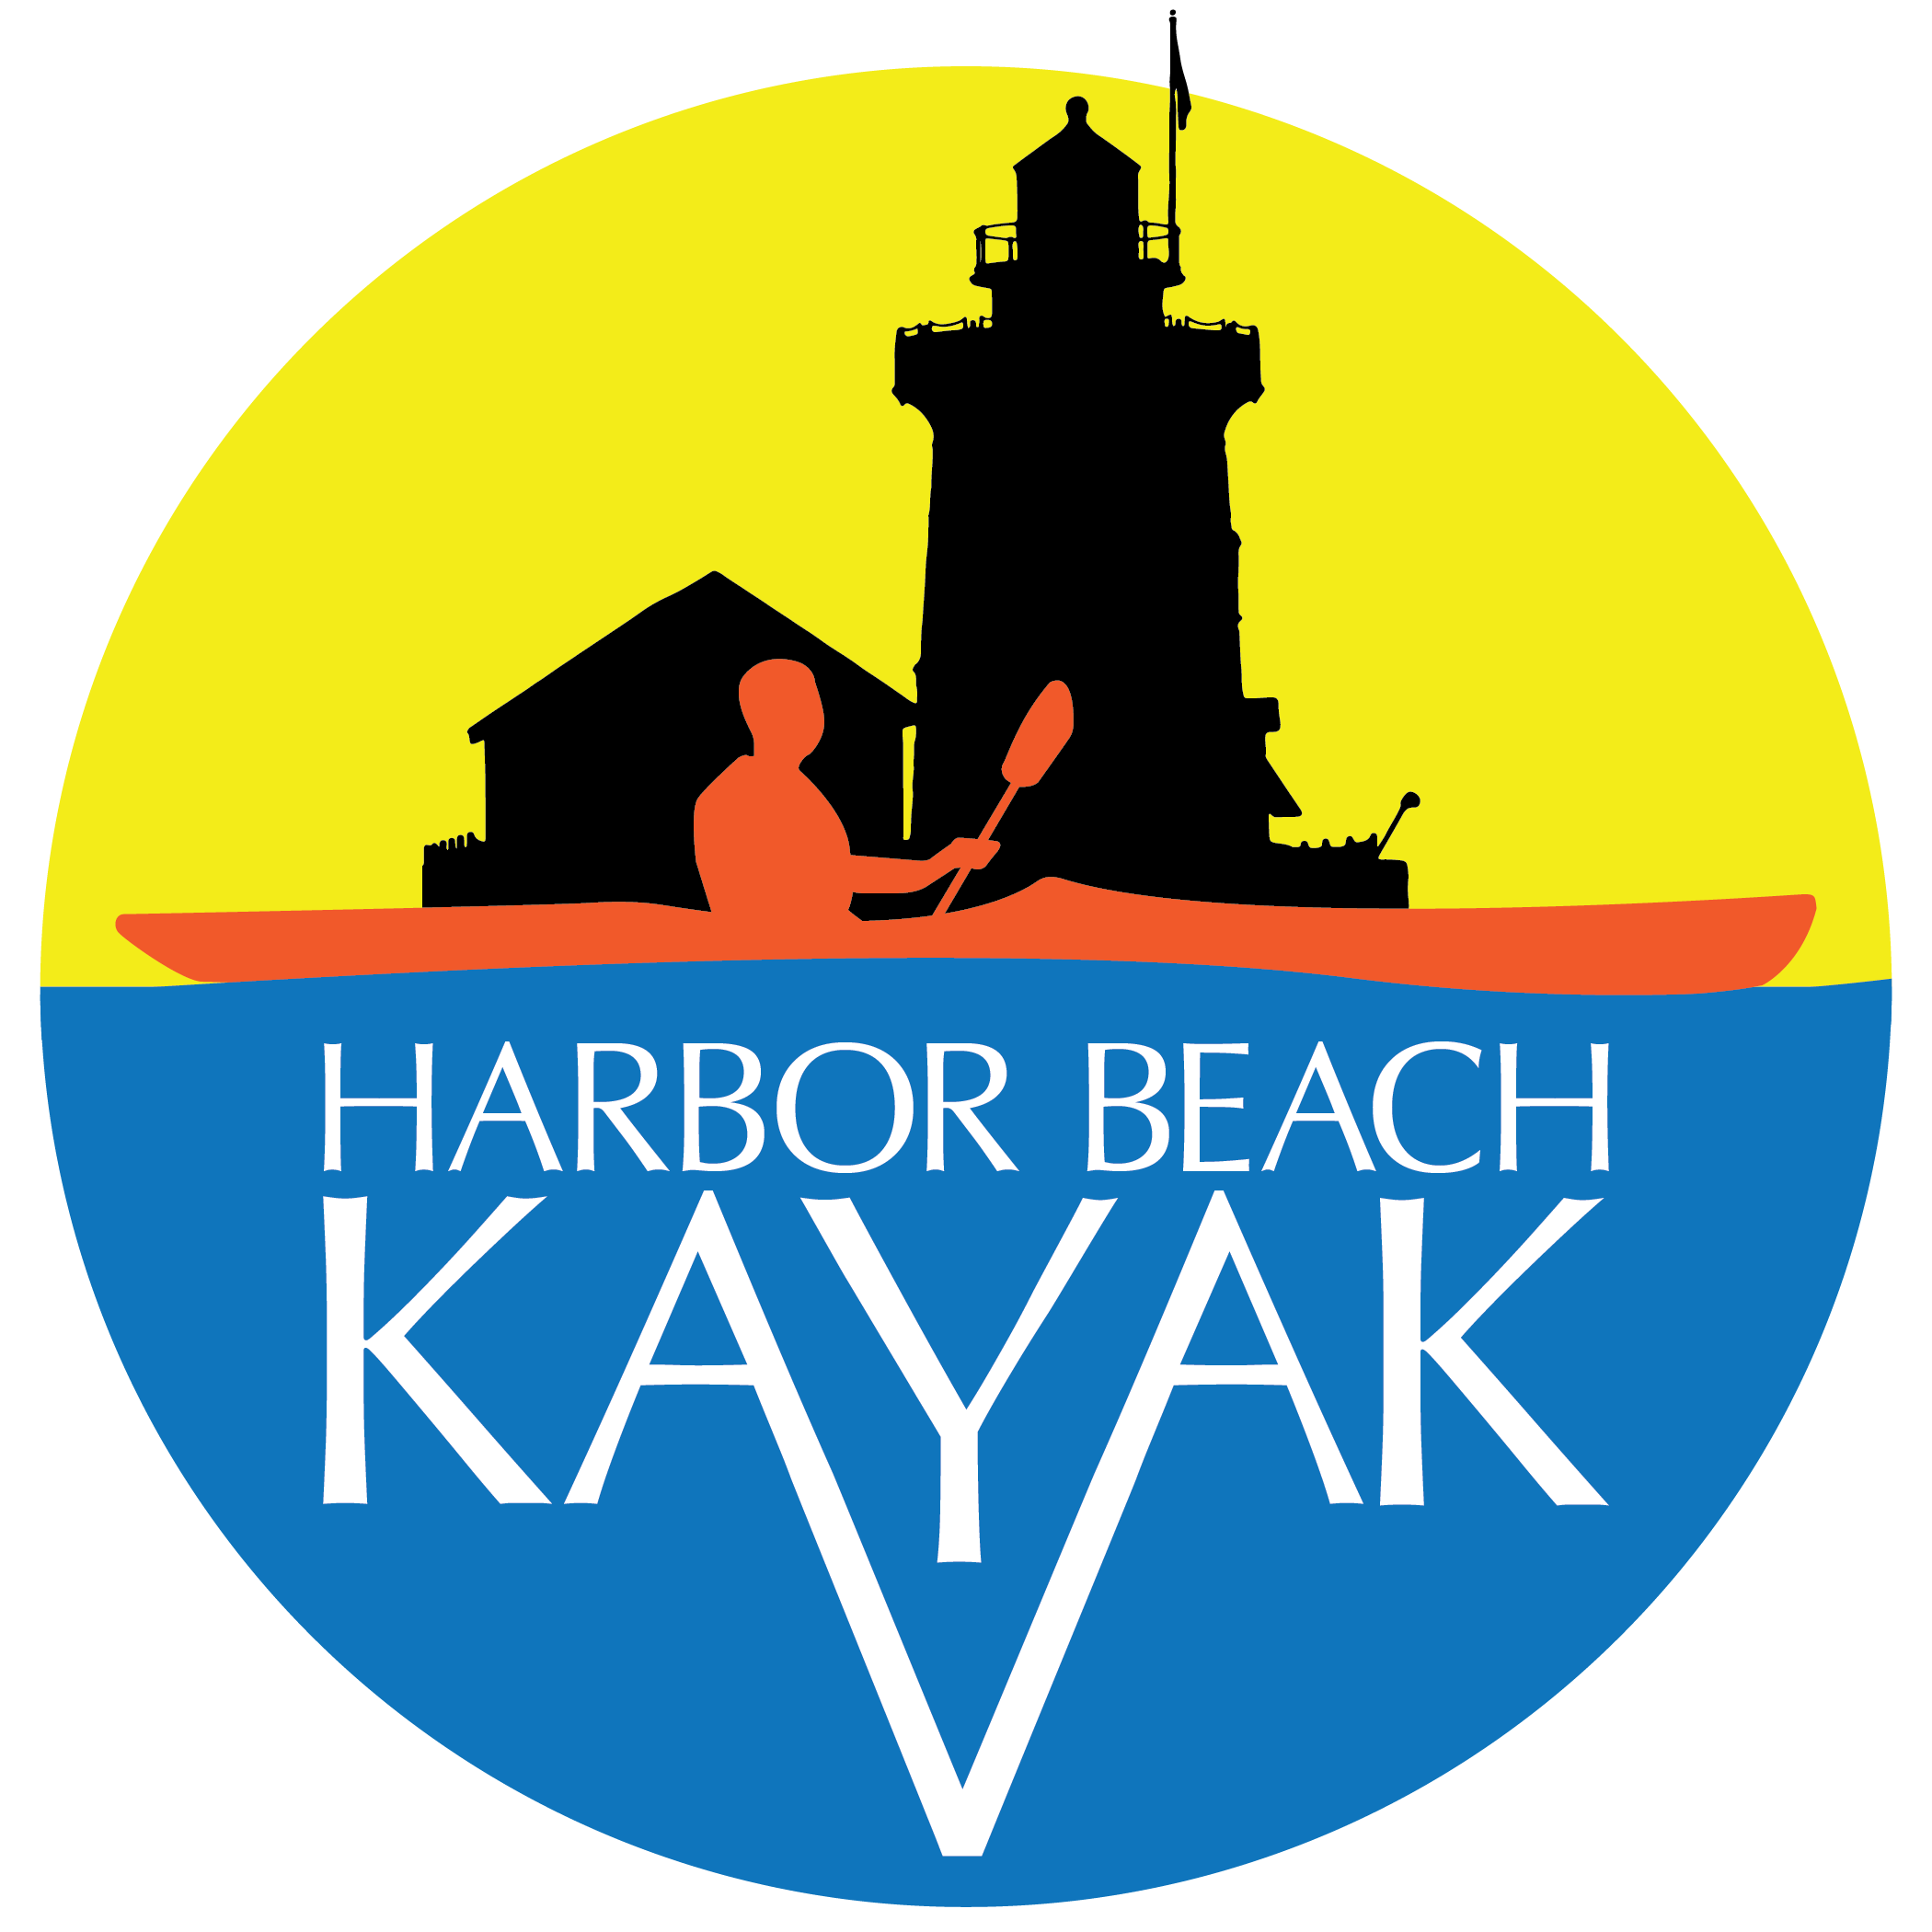 Harbor Beach Kayak (Copy) (Copy)